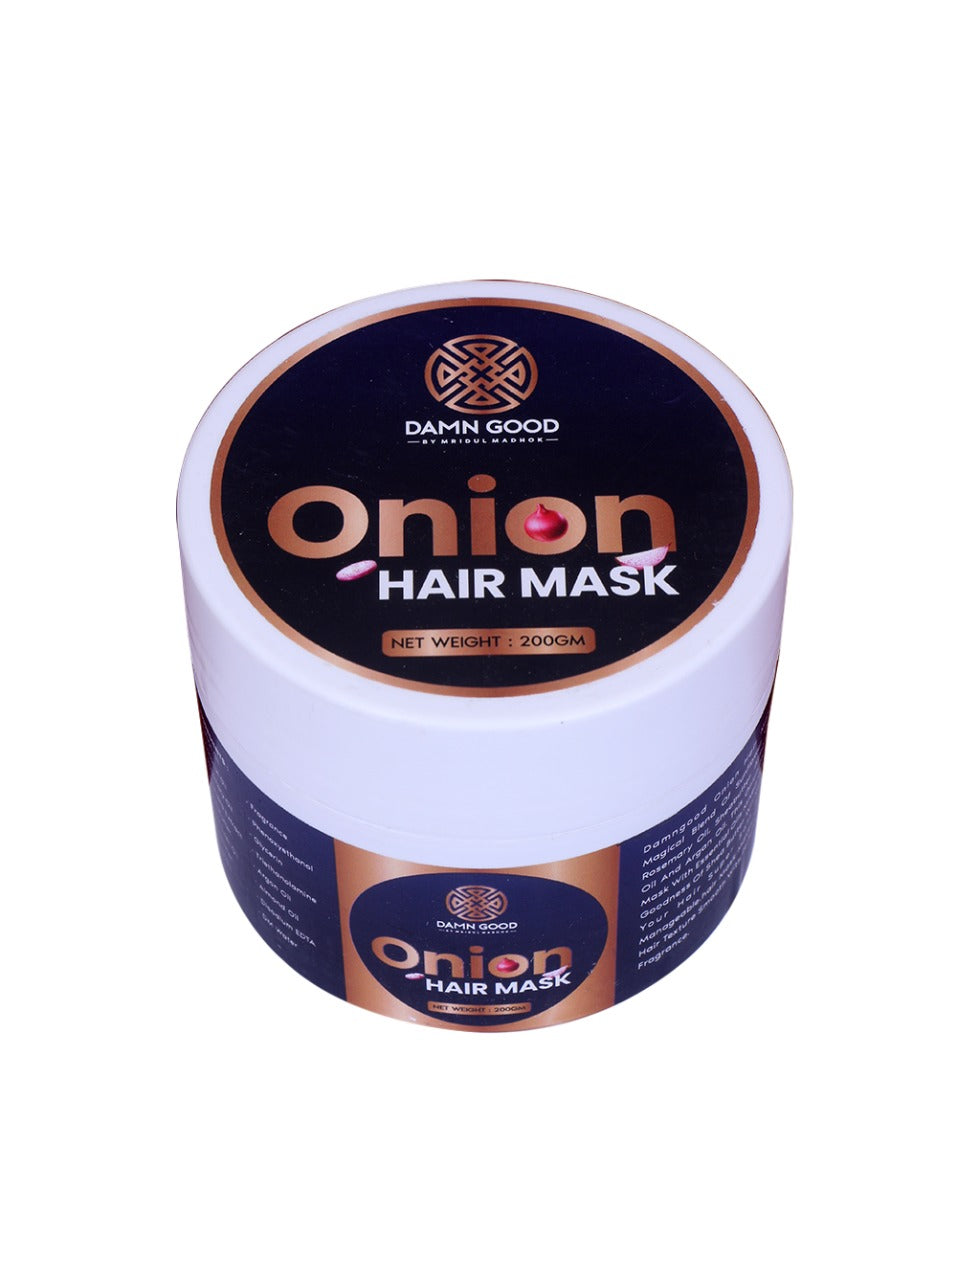 DamnGood Onion Hair Mask 200 GM